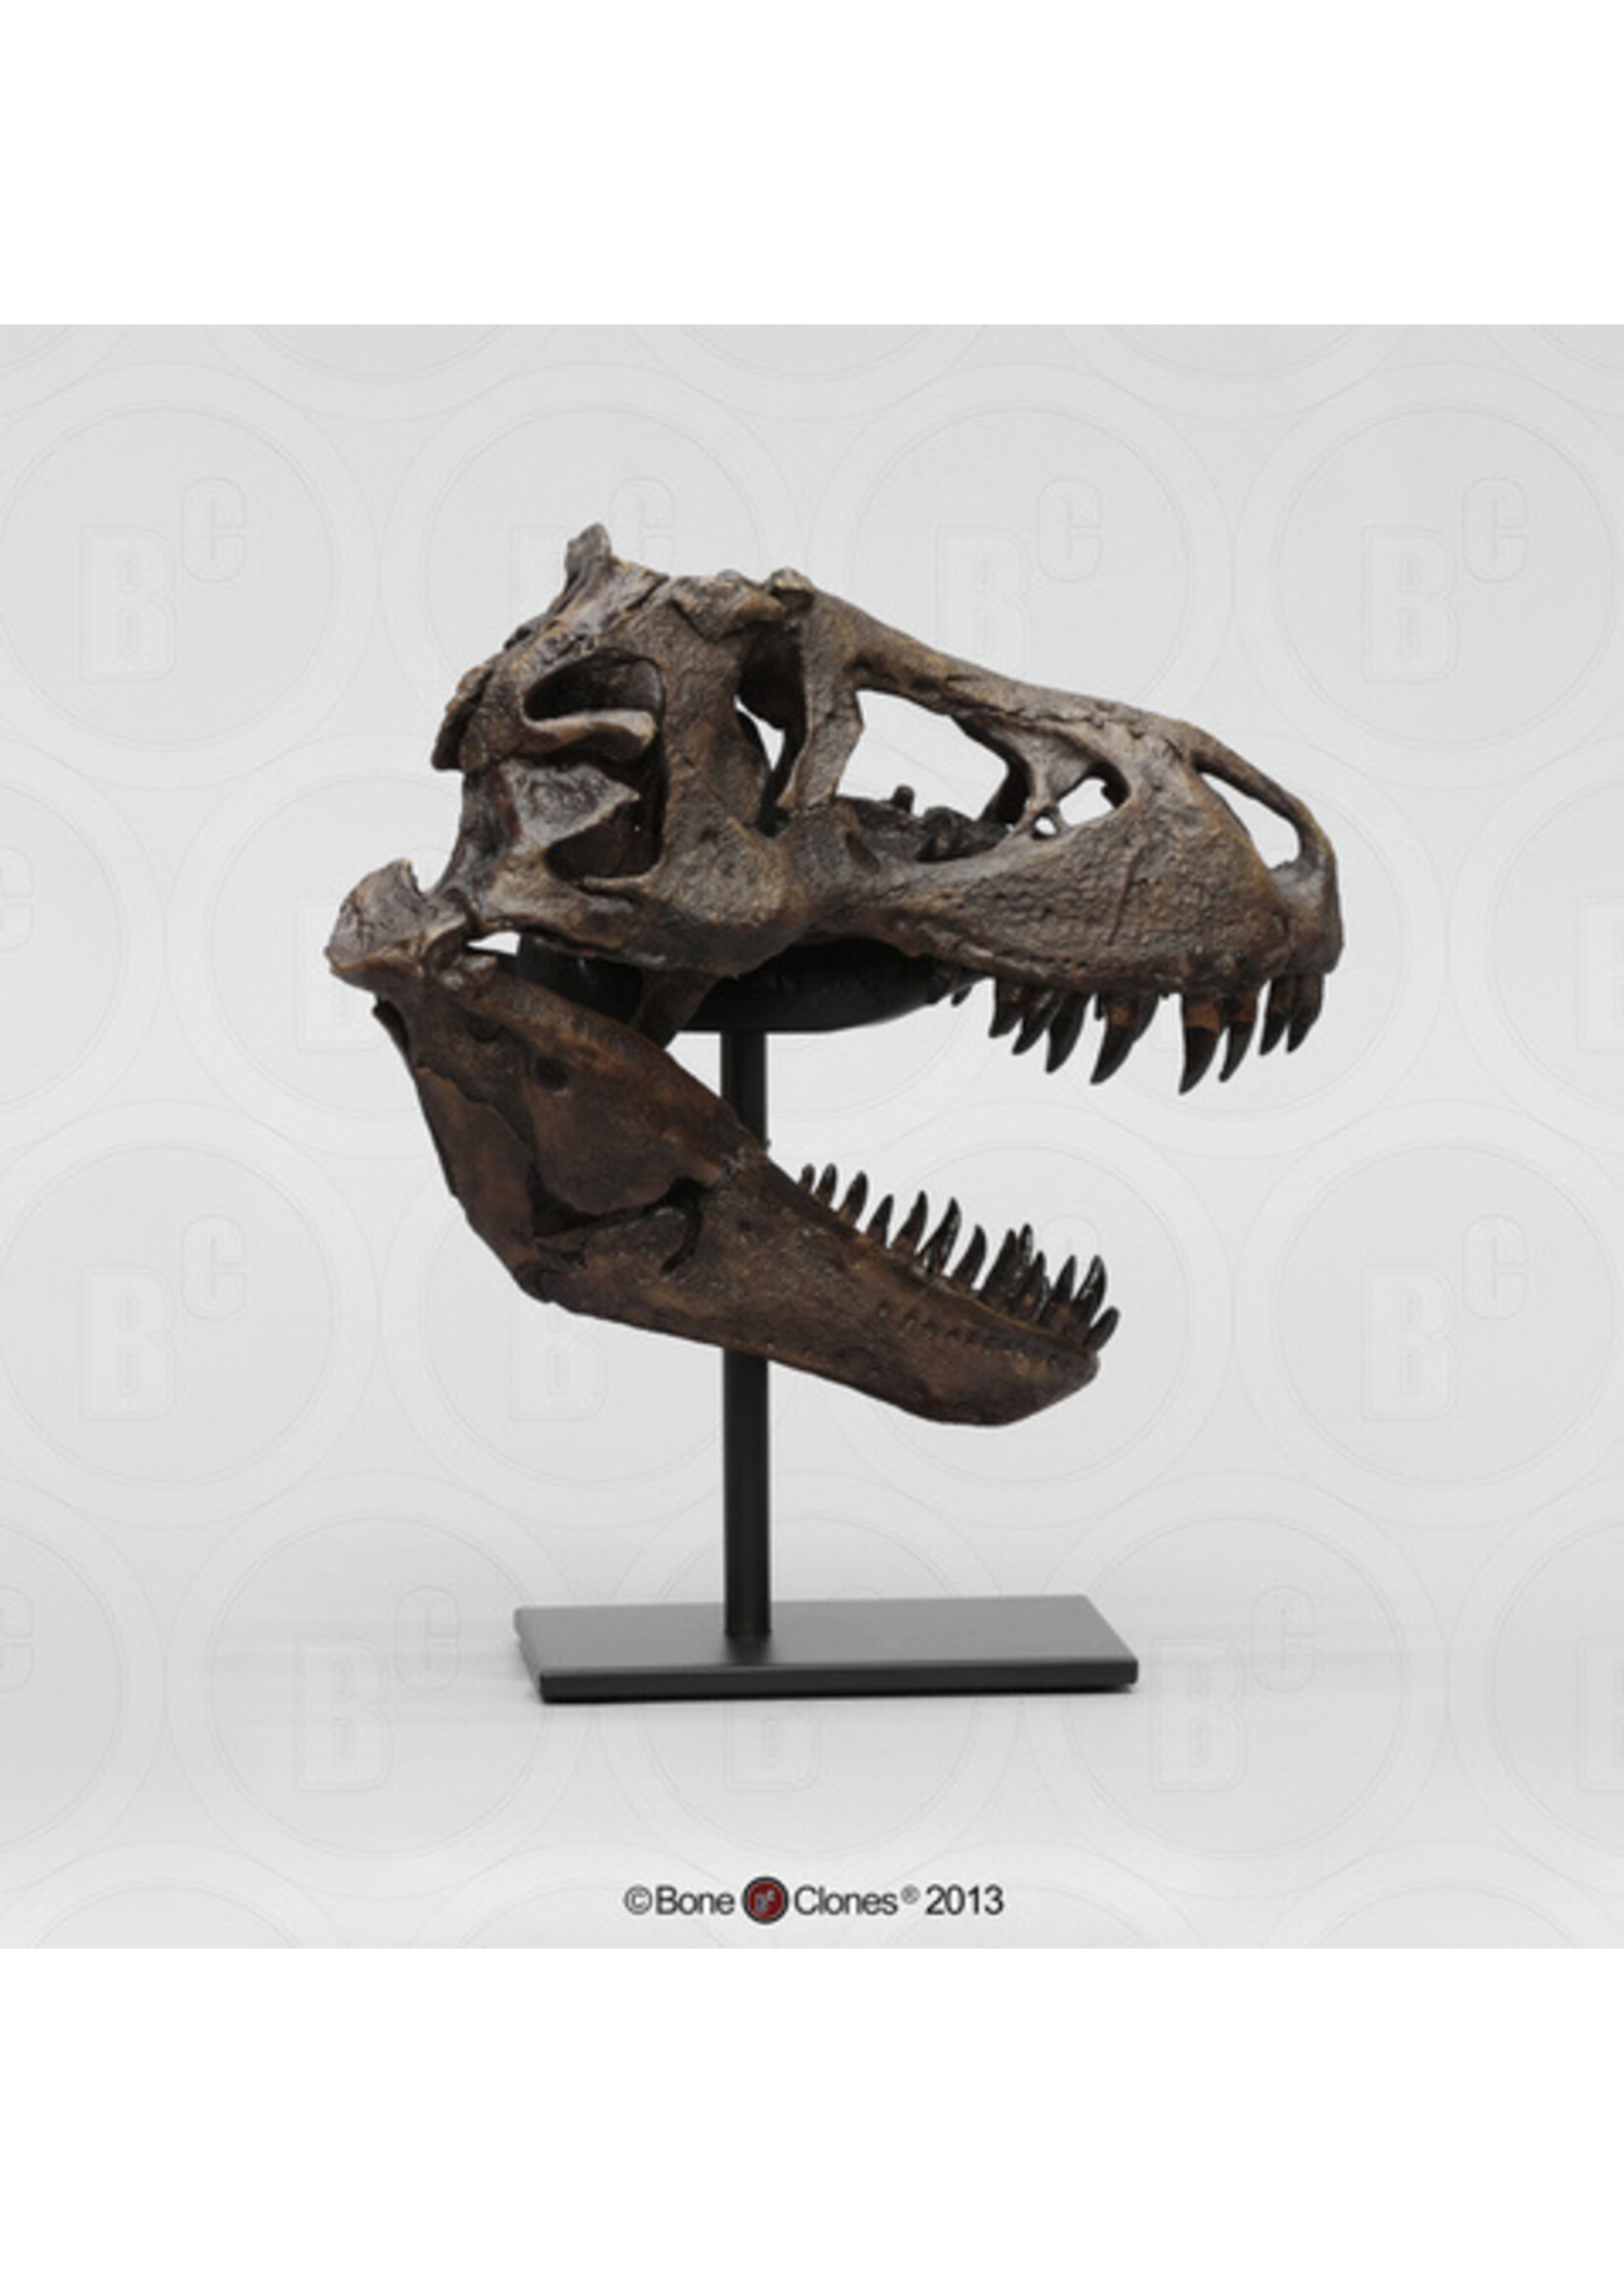 STAN Tyrannosaurus rex ® - 1/9 Scale Sculptured Skull - Fossil Replica - Replicas/Models